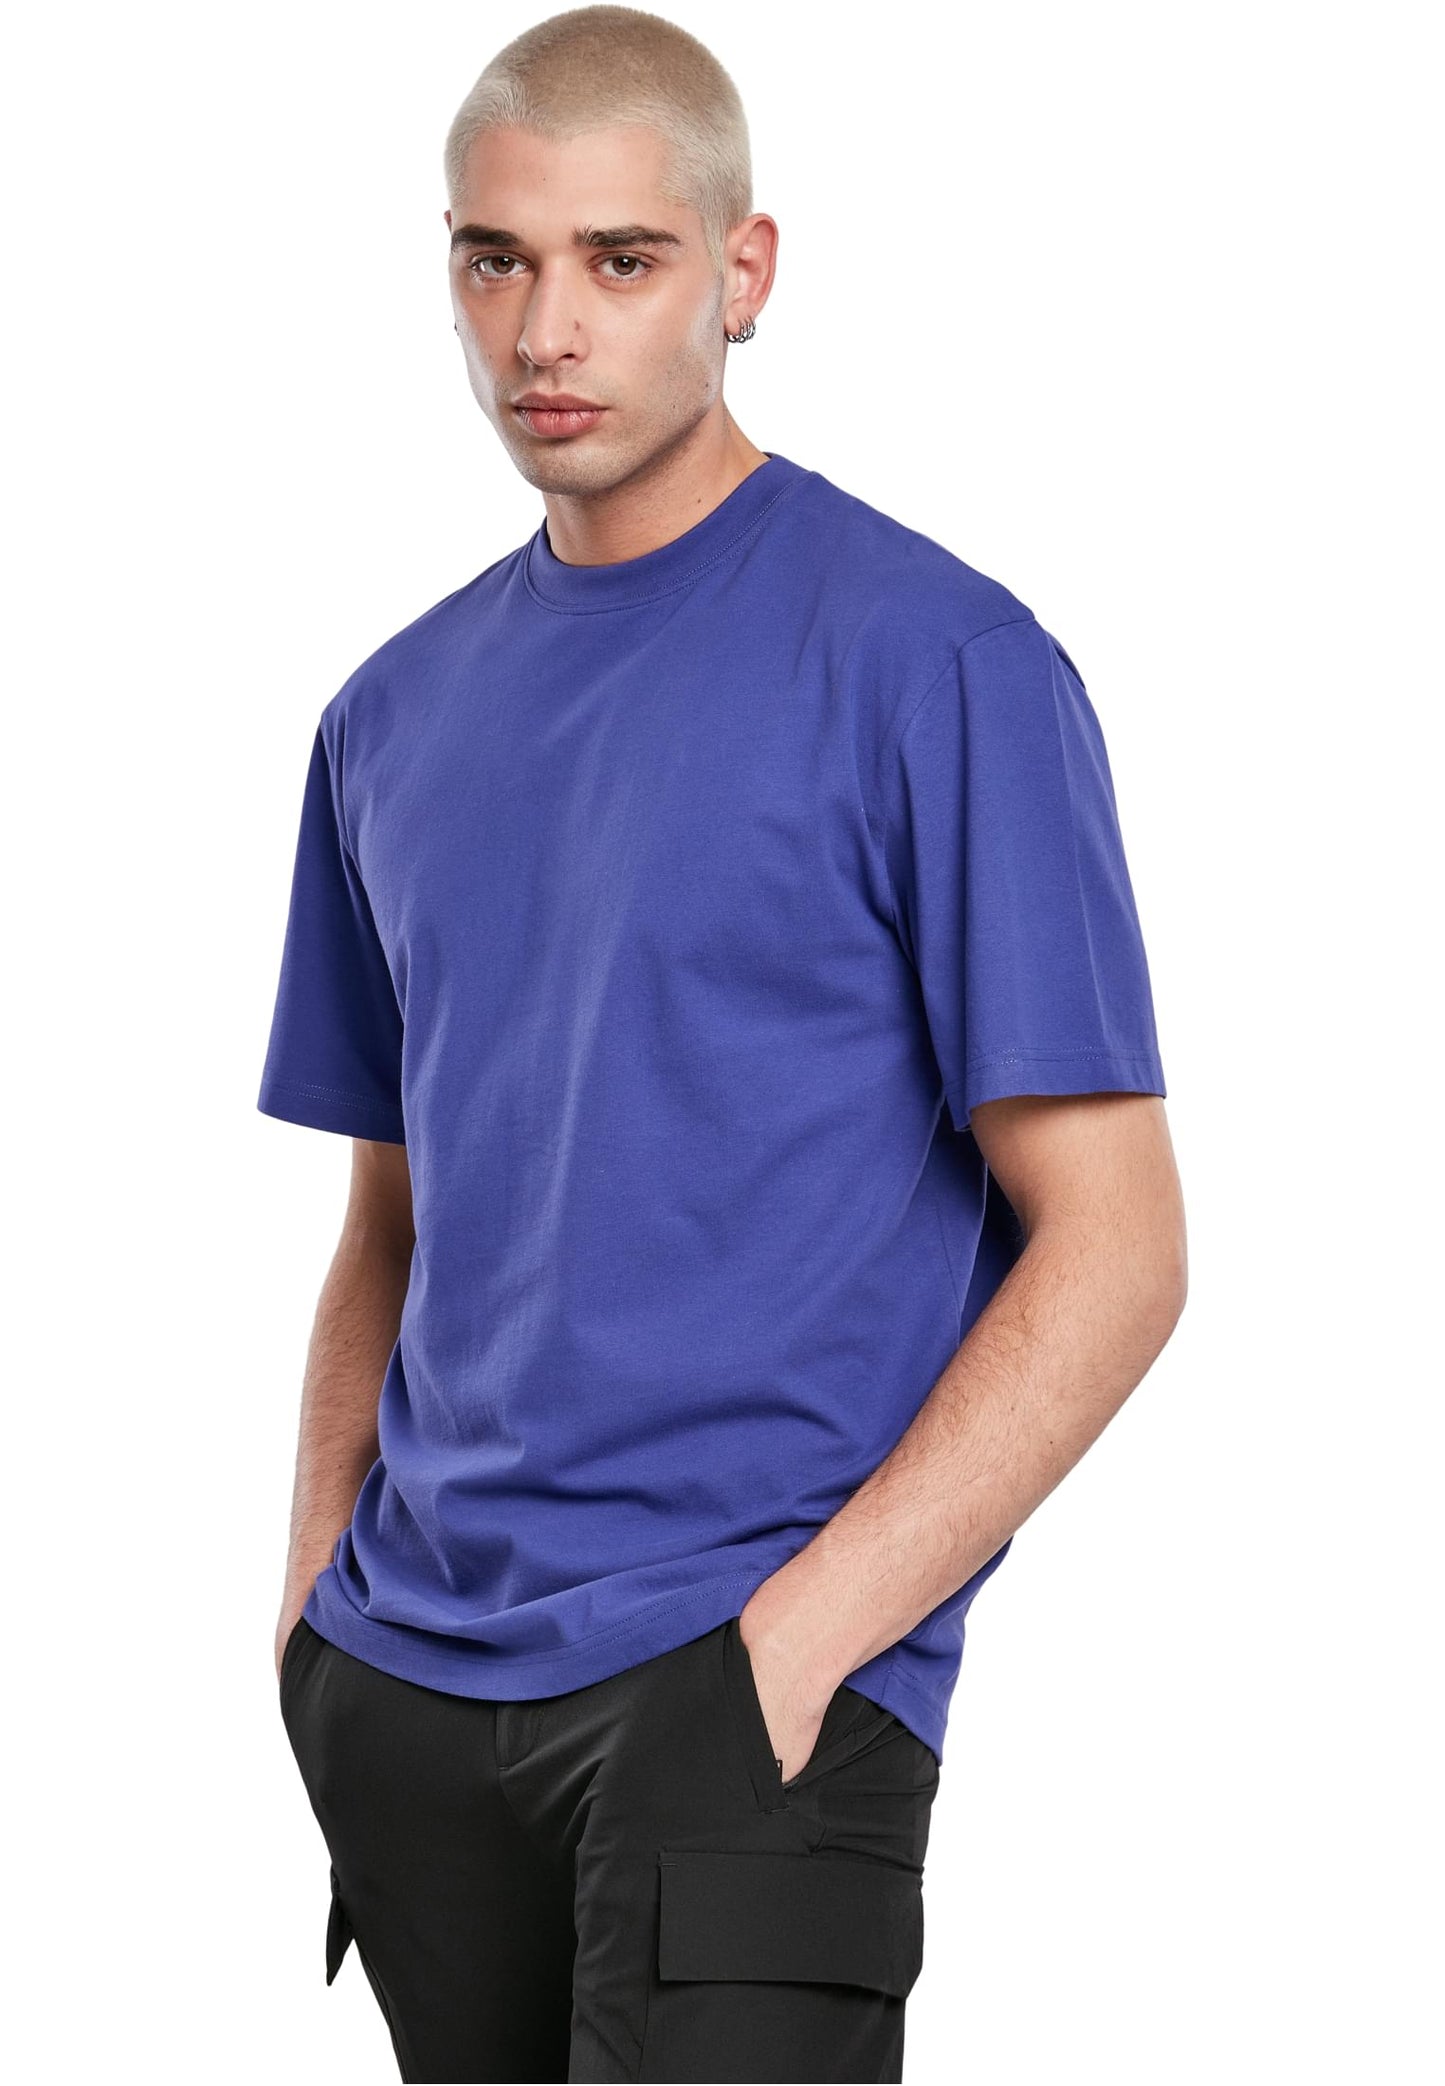 Urban Classics Tall T-Shirt Baggy / Loose Fit in weiteren Farben-Street-& Sportswear Aurich